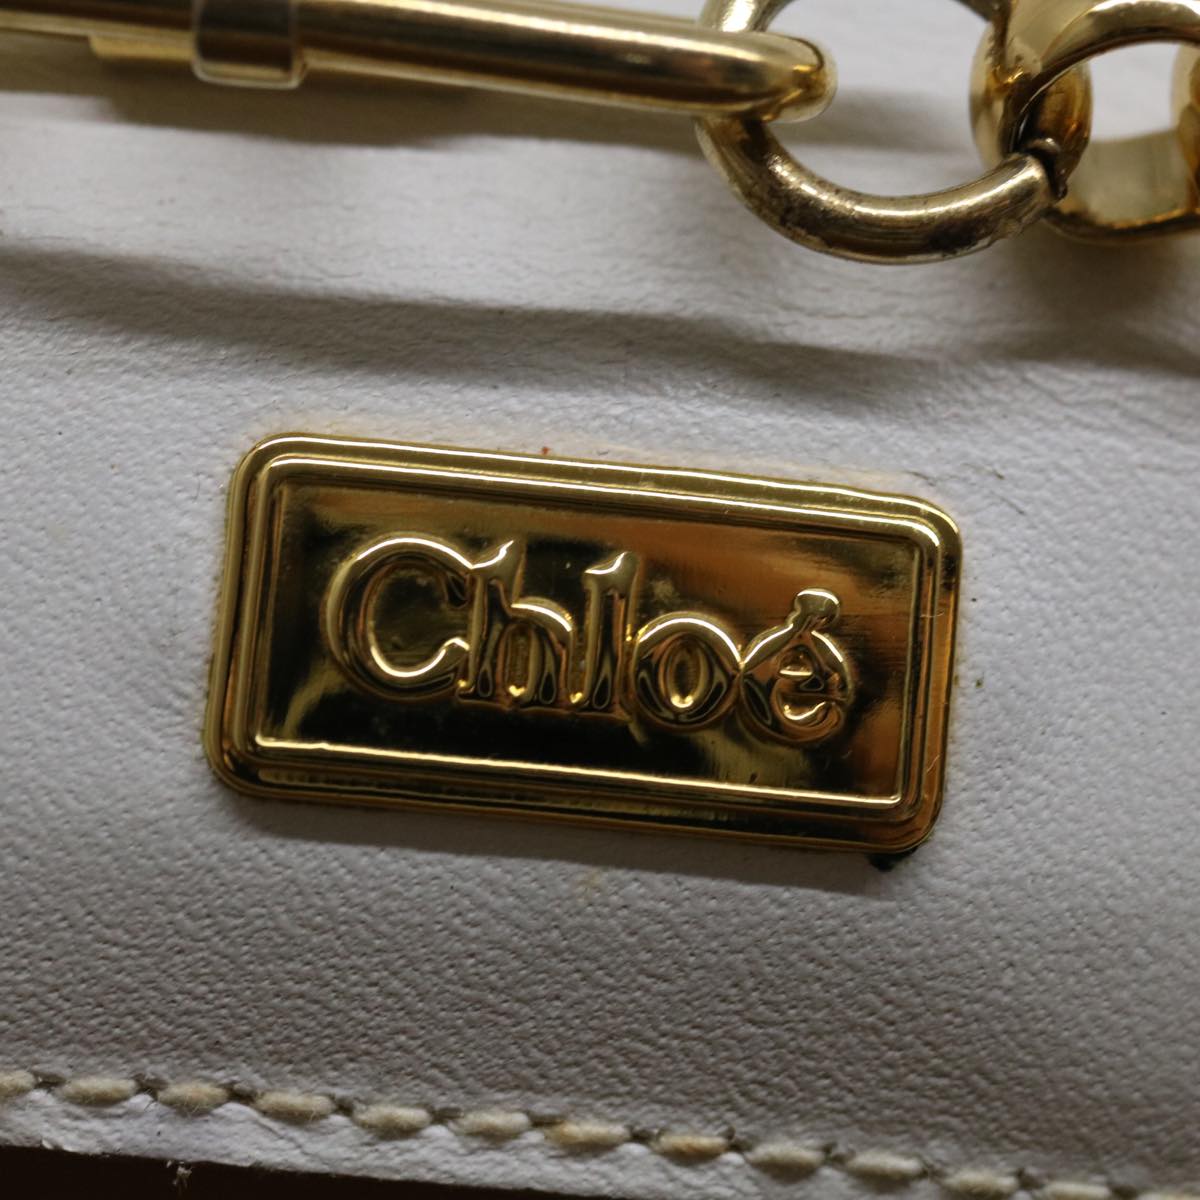 Chloe Chain Shoulder Bag Leather Vintage White Auth ar11719